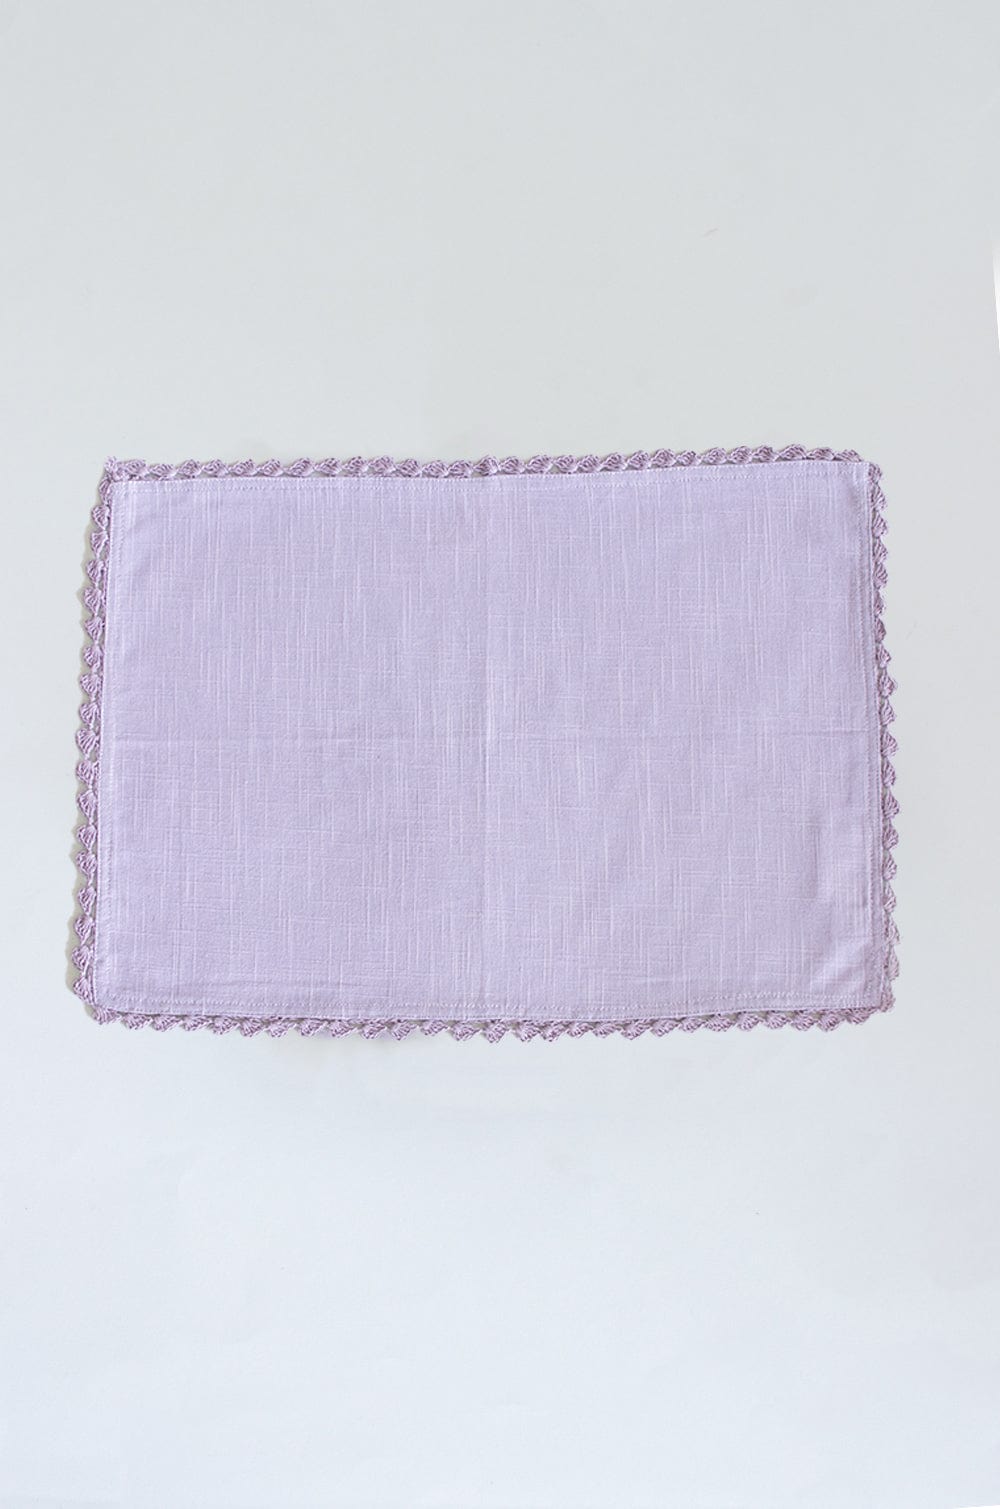 Lavender Fields Hand Crochet Placemats - Set of 6